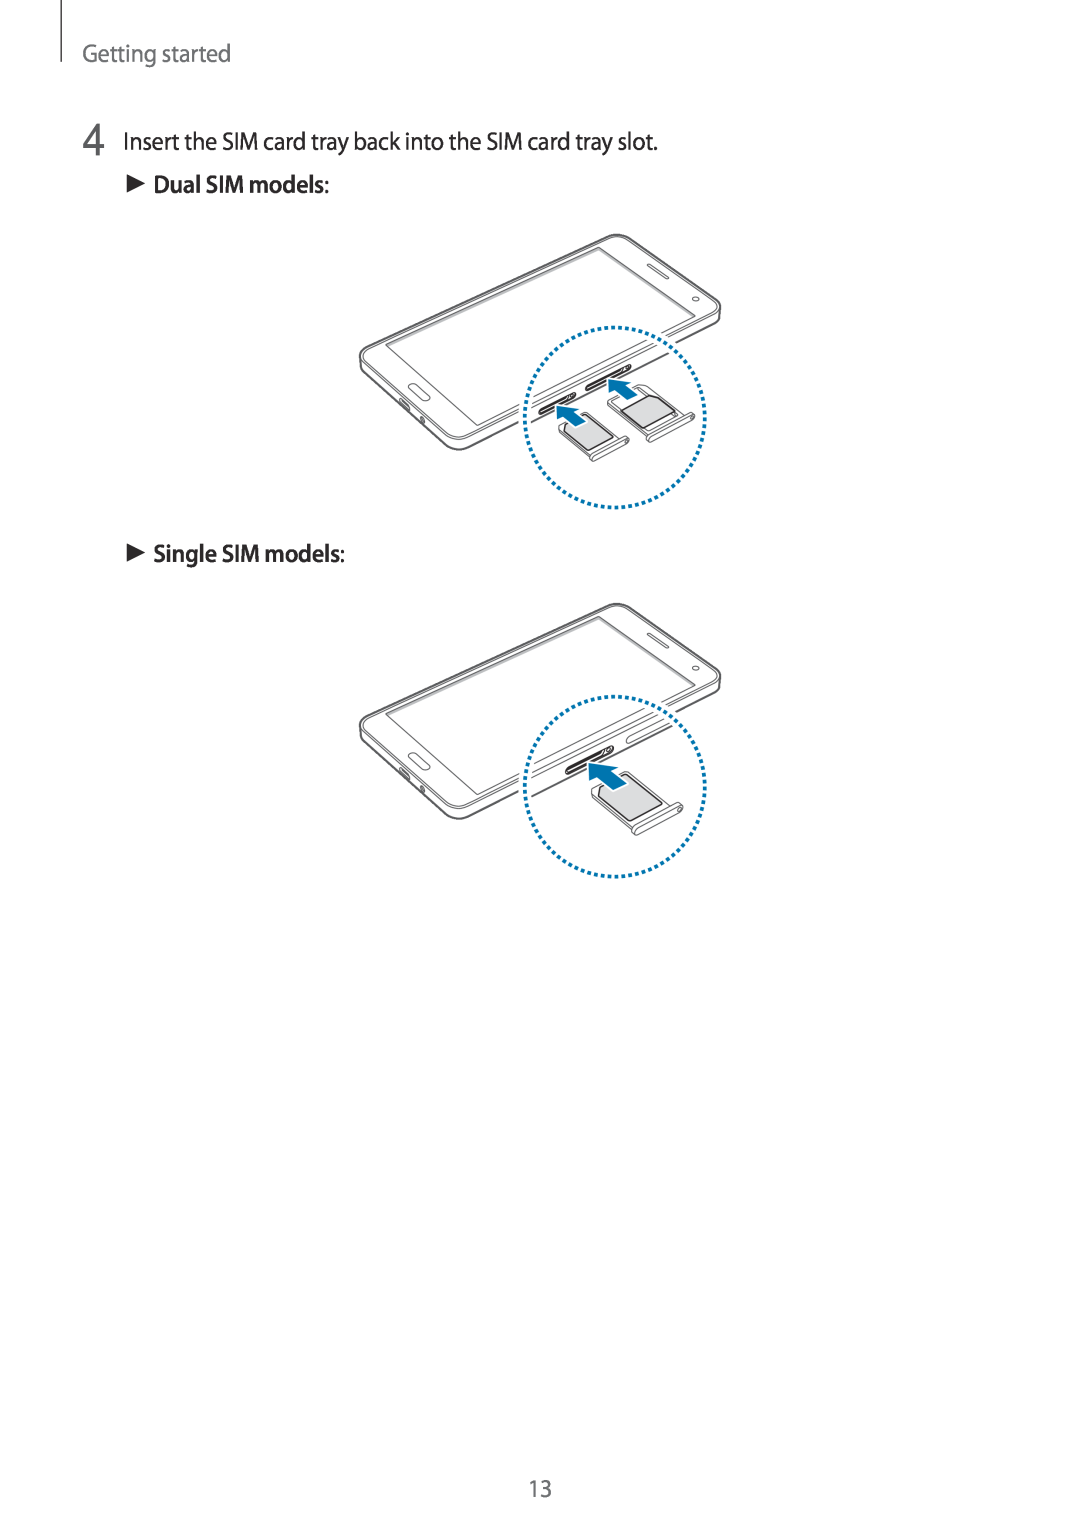 Samsung SM-A700FZDAXEF, SM-A700FZKADBT manual Getting started, Insert the SIM card tray back into the SIM card tray slot 